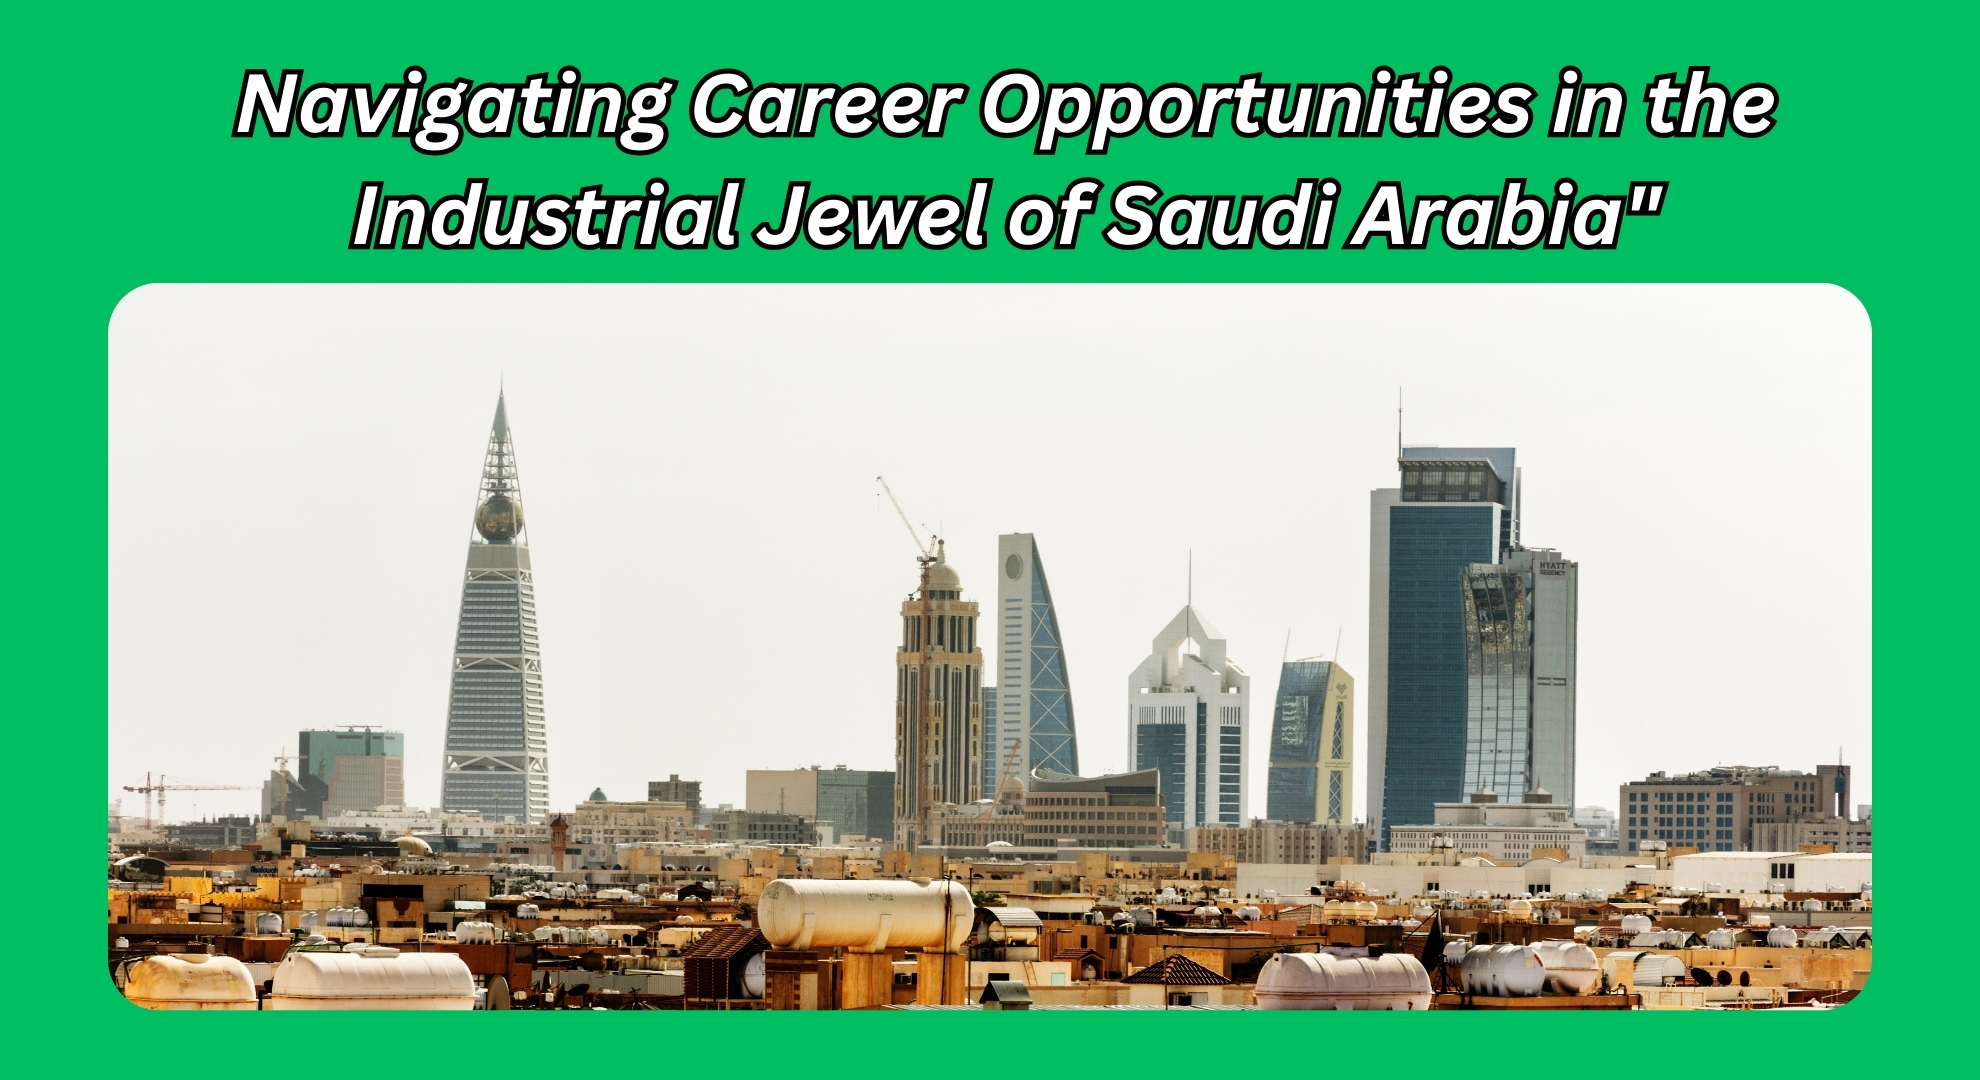 Navigating Career Opportunities in the Industrial Jewel of Saudi Arabia"